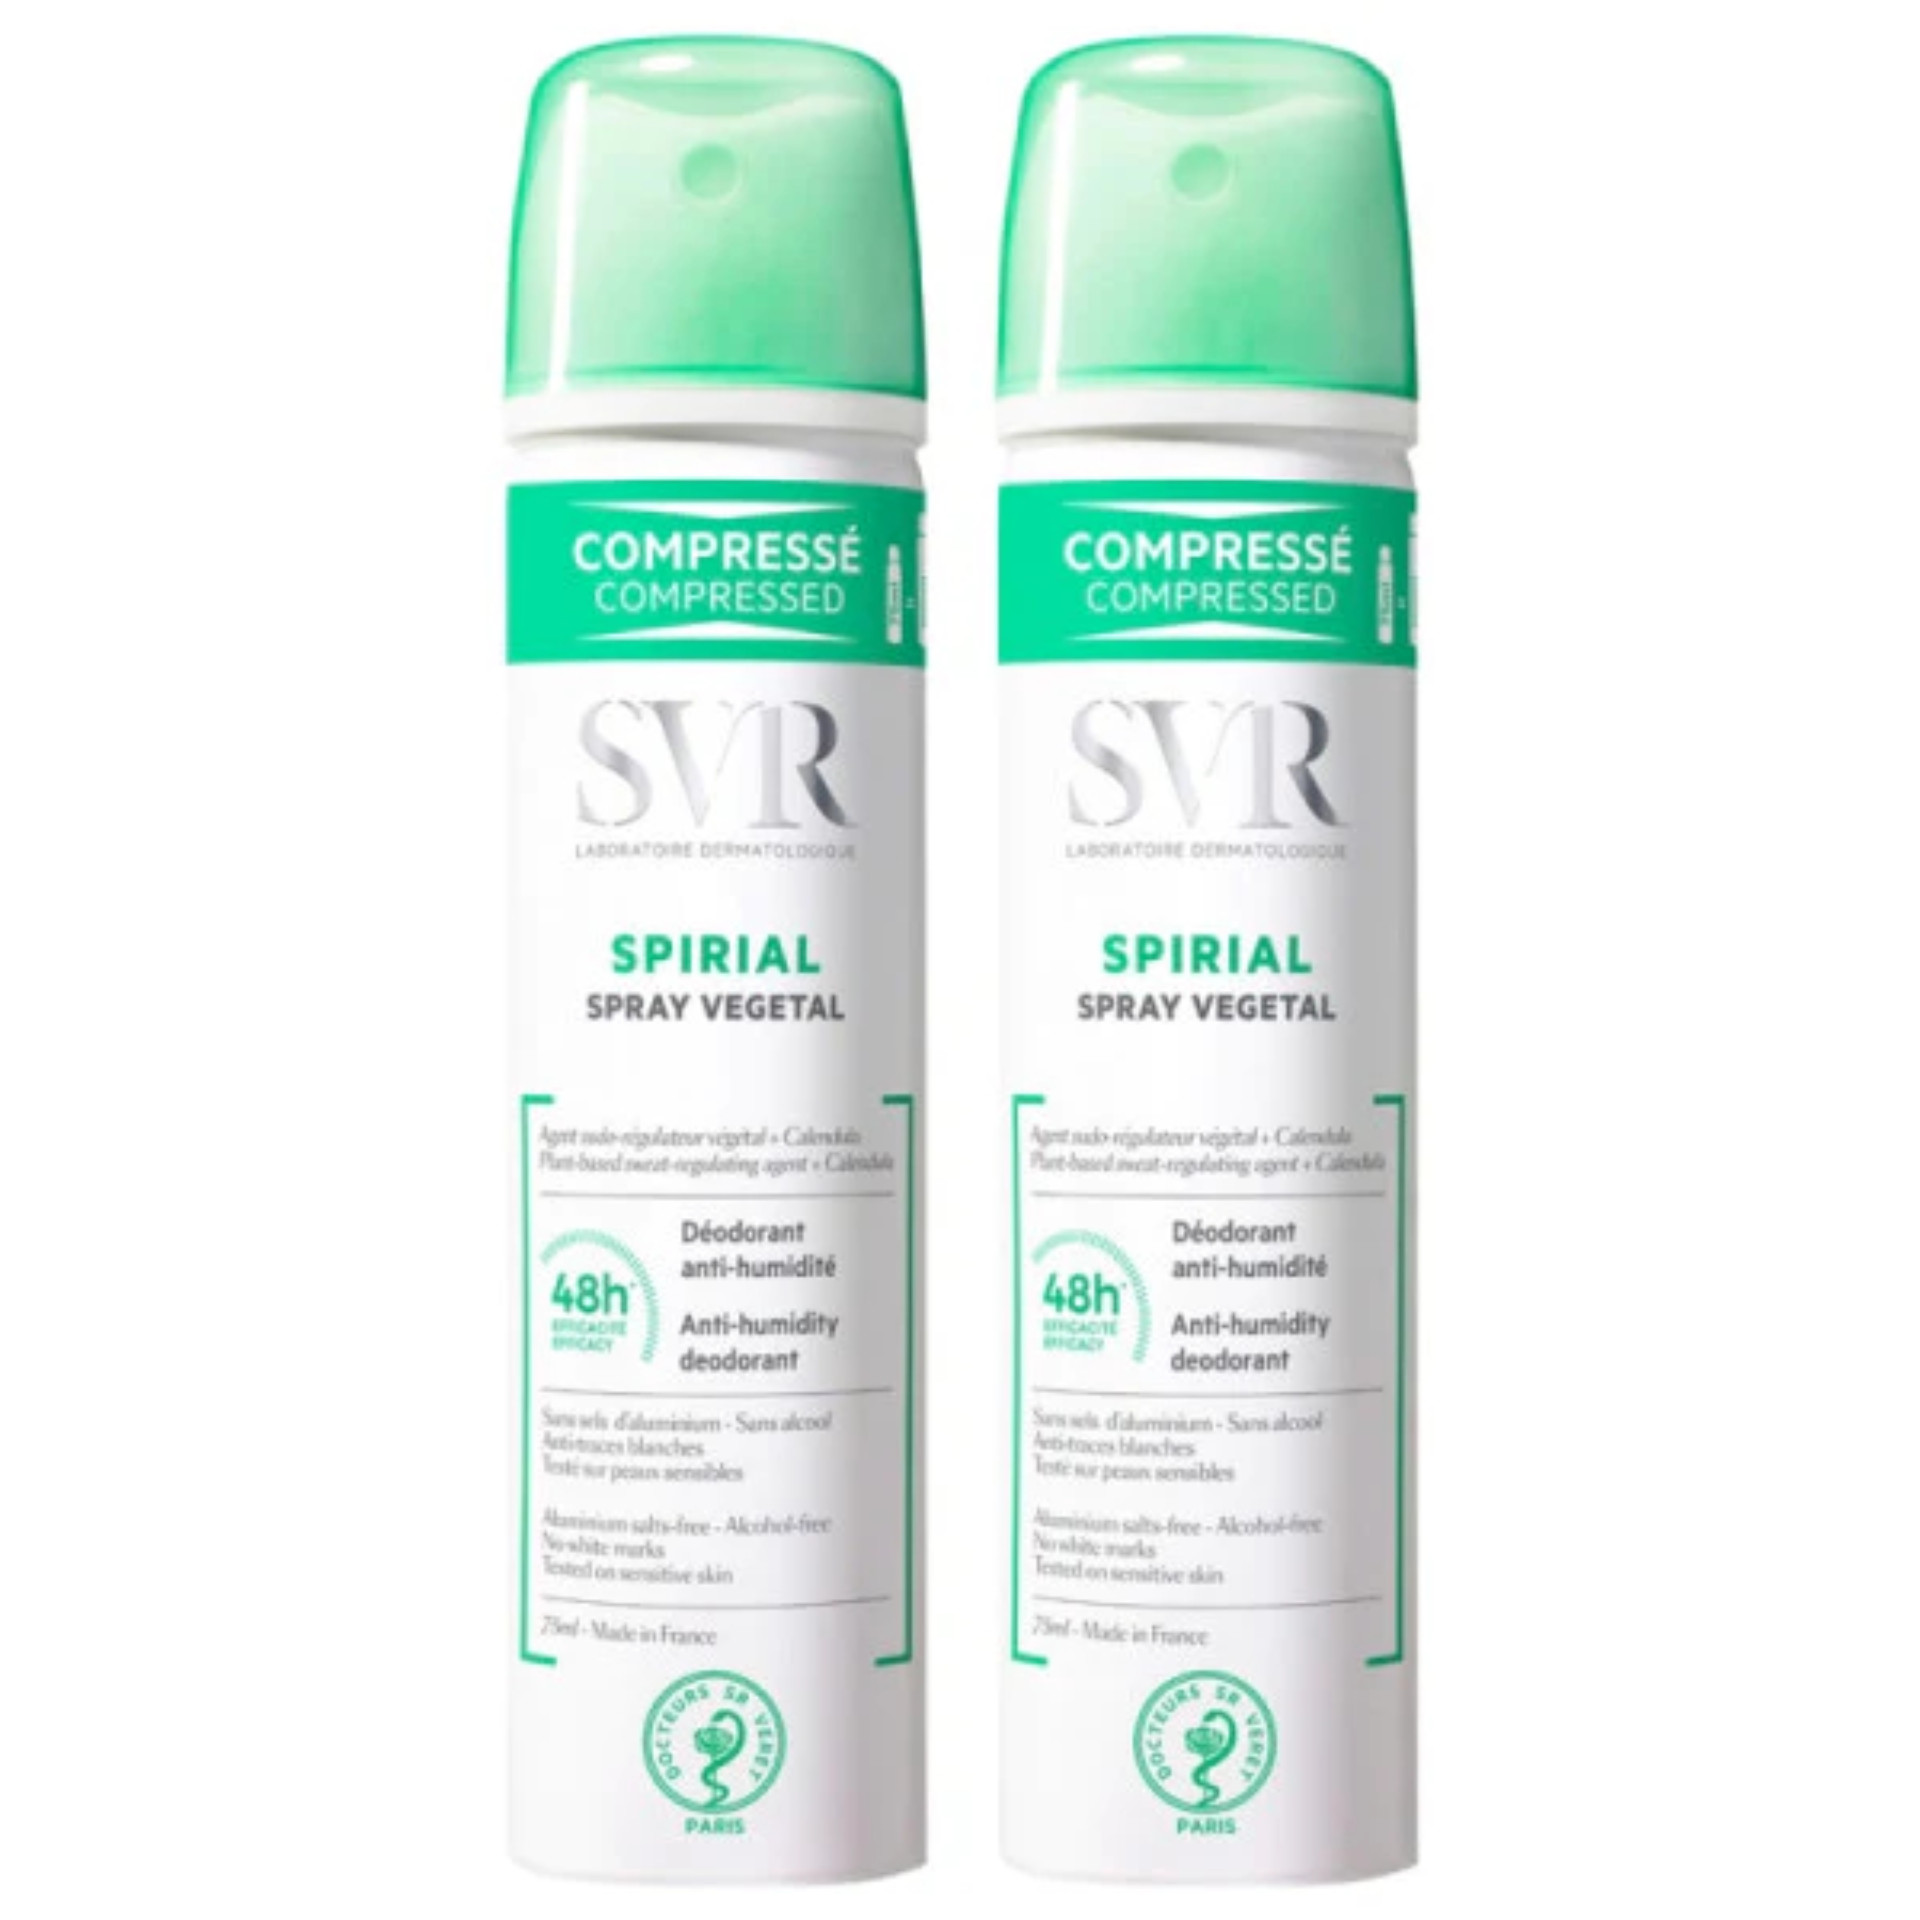 SVR Spirial Spray Vegetal Duo 13.90